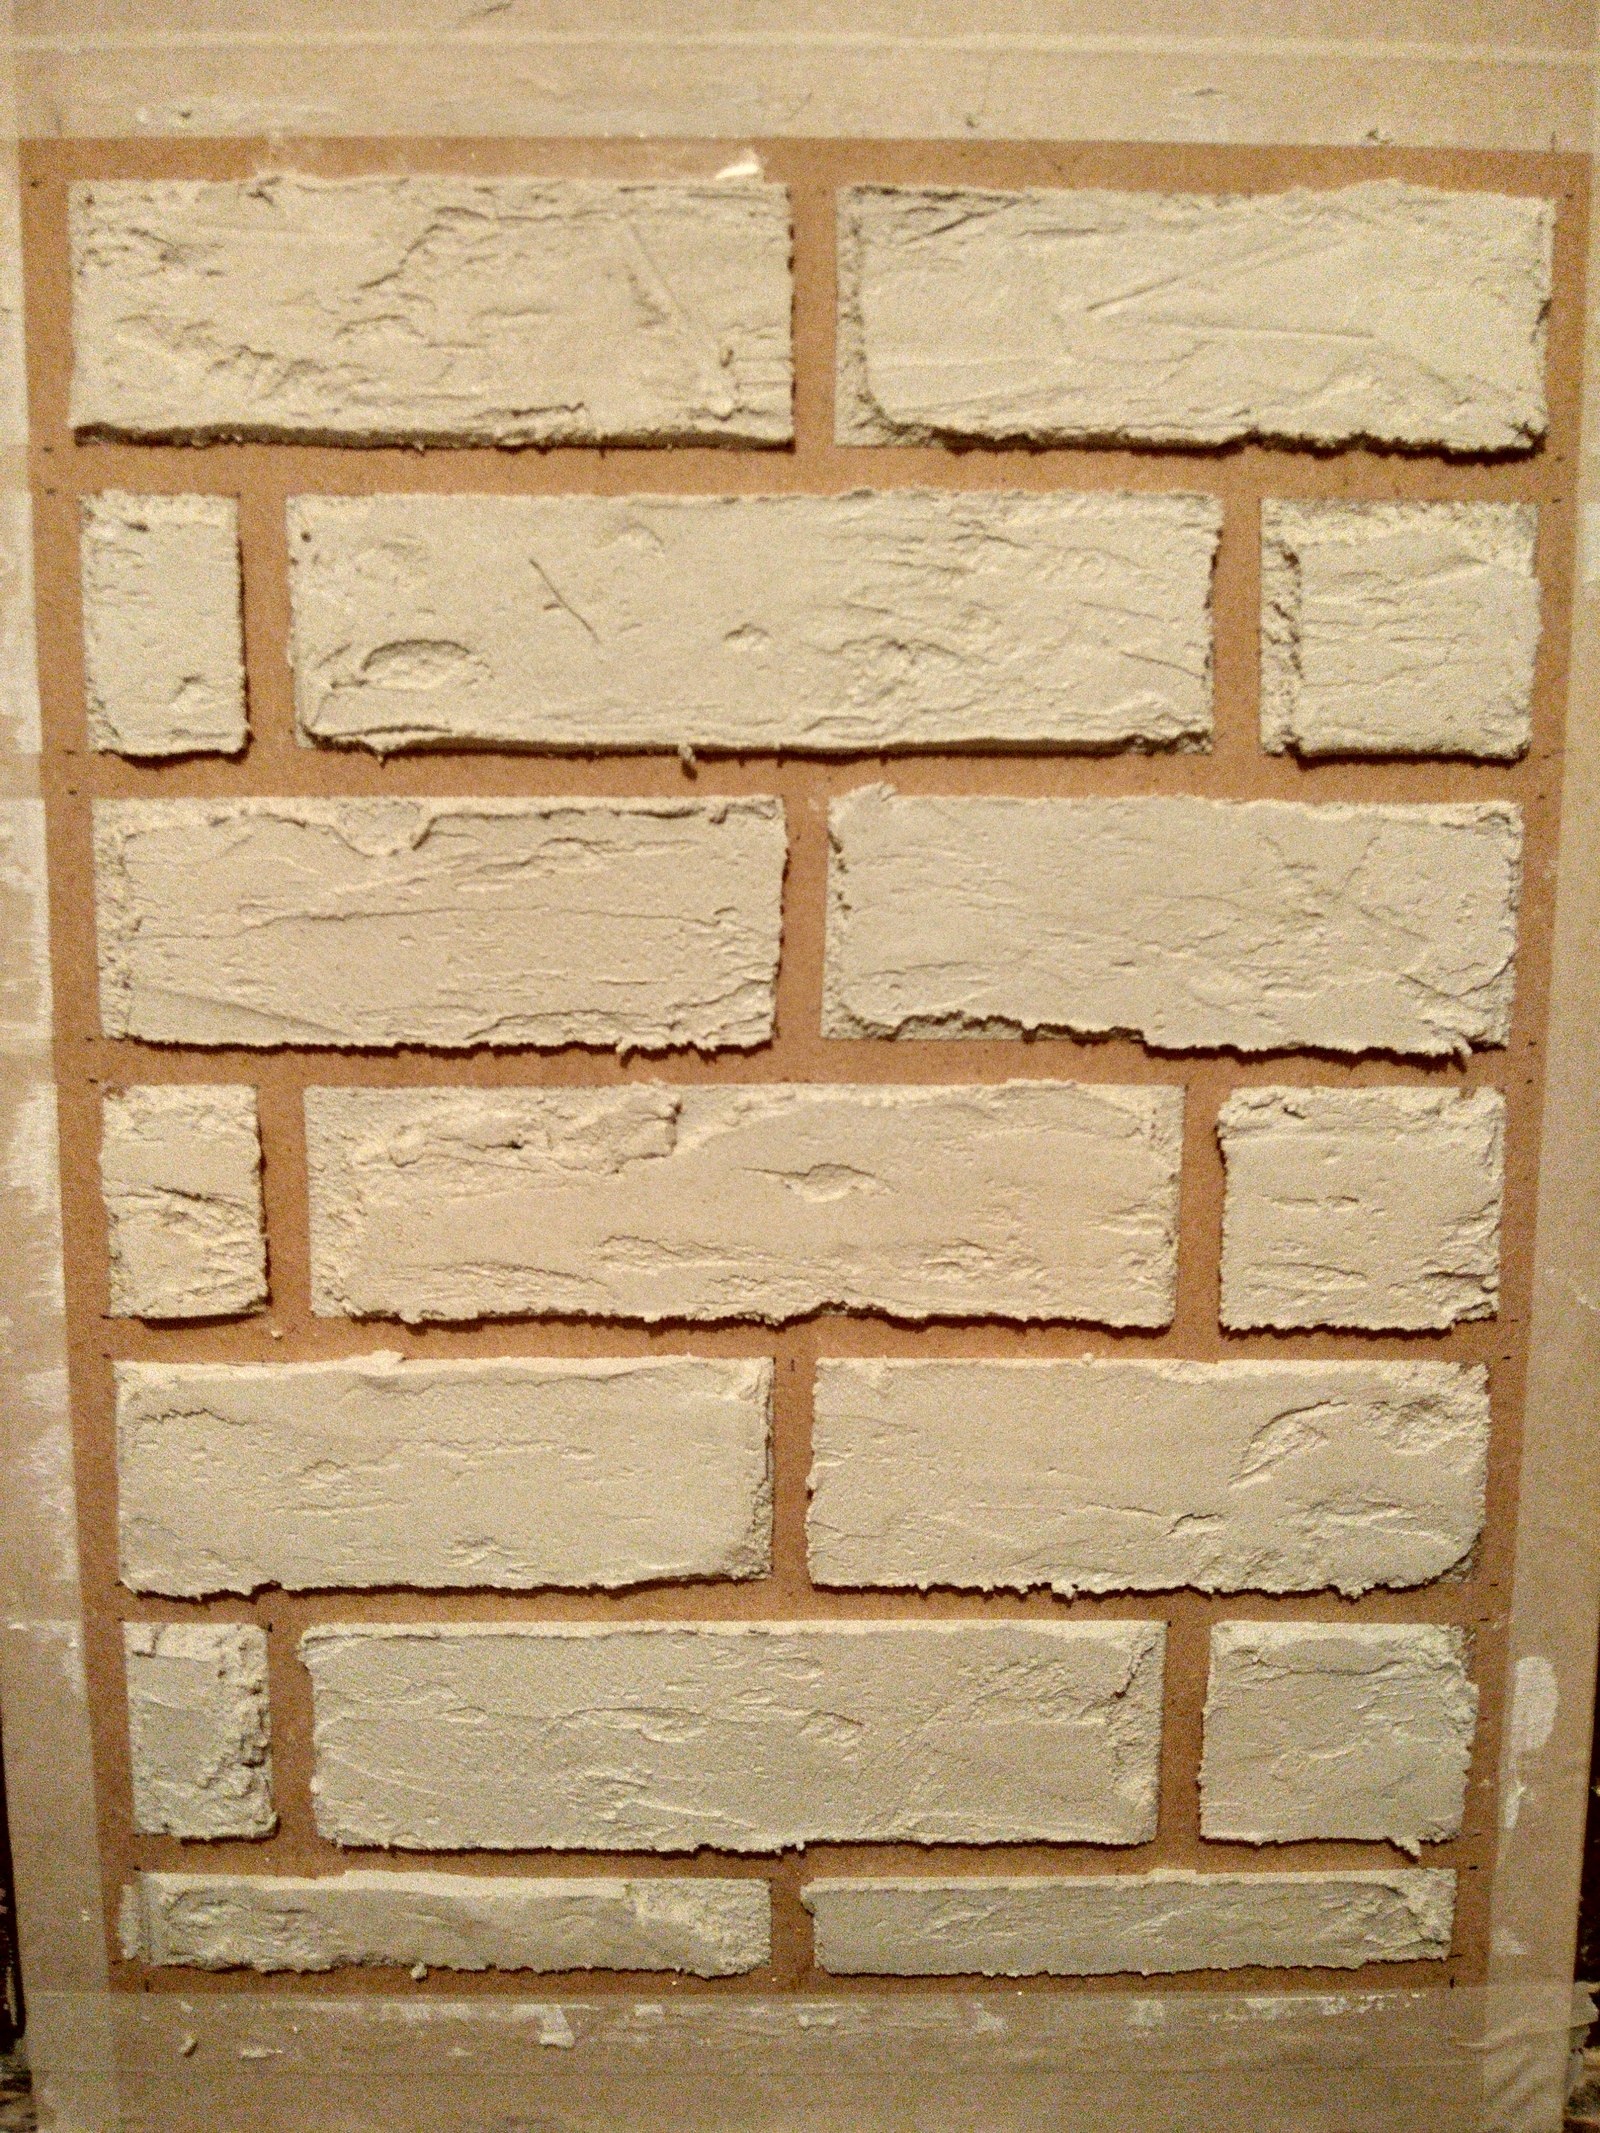 мастер-класс : кирпичная стена из пенопласта, фотофон | DIY brick wall of foam